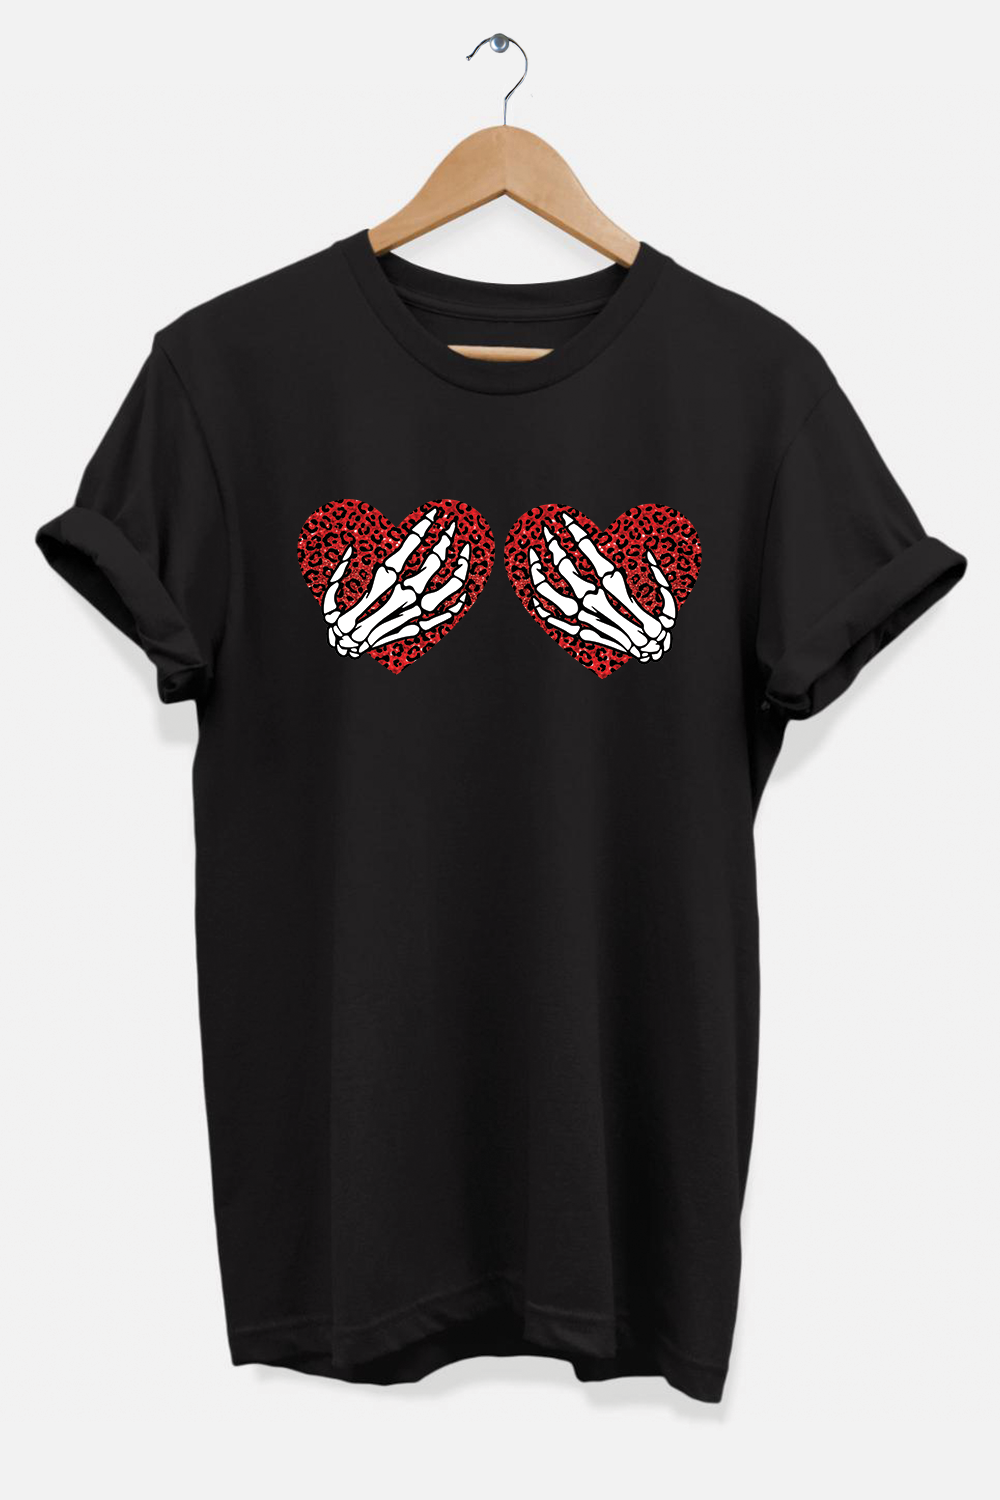 Skeleton Hands over Breast Heart T-Shirt